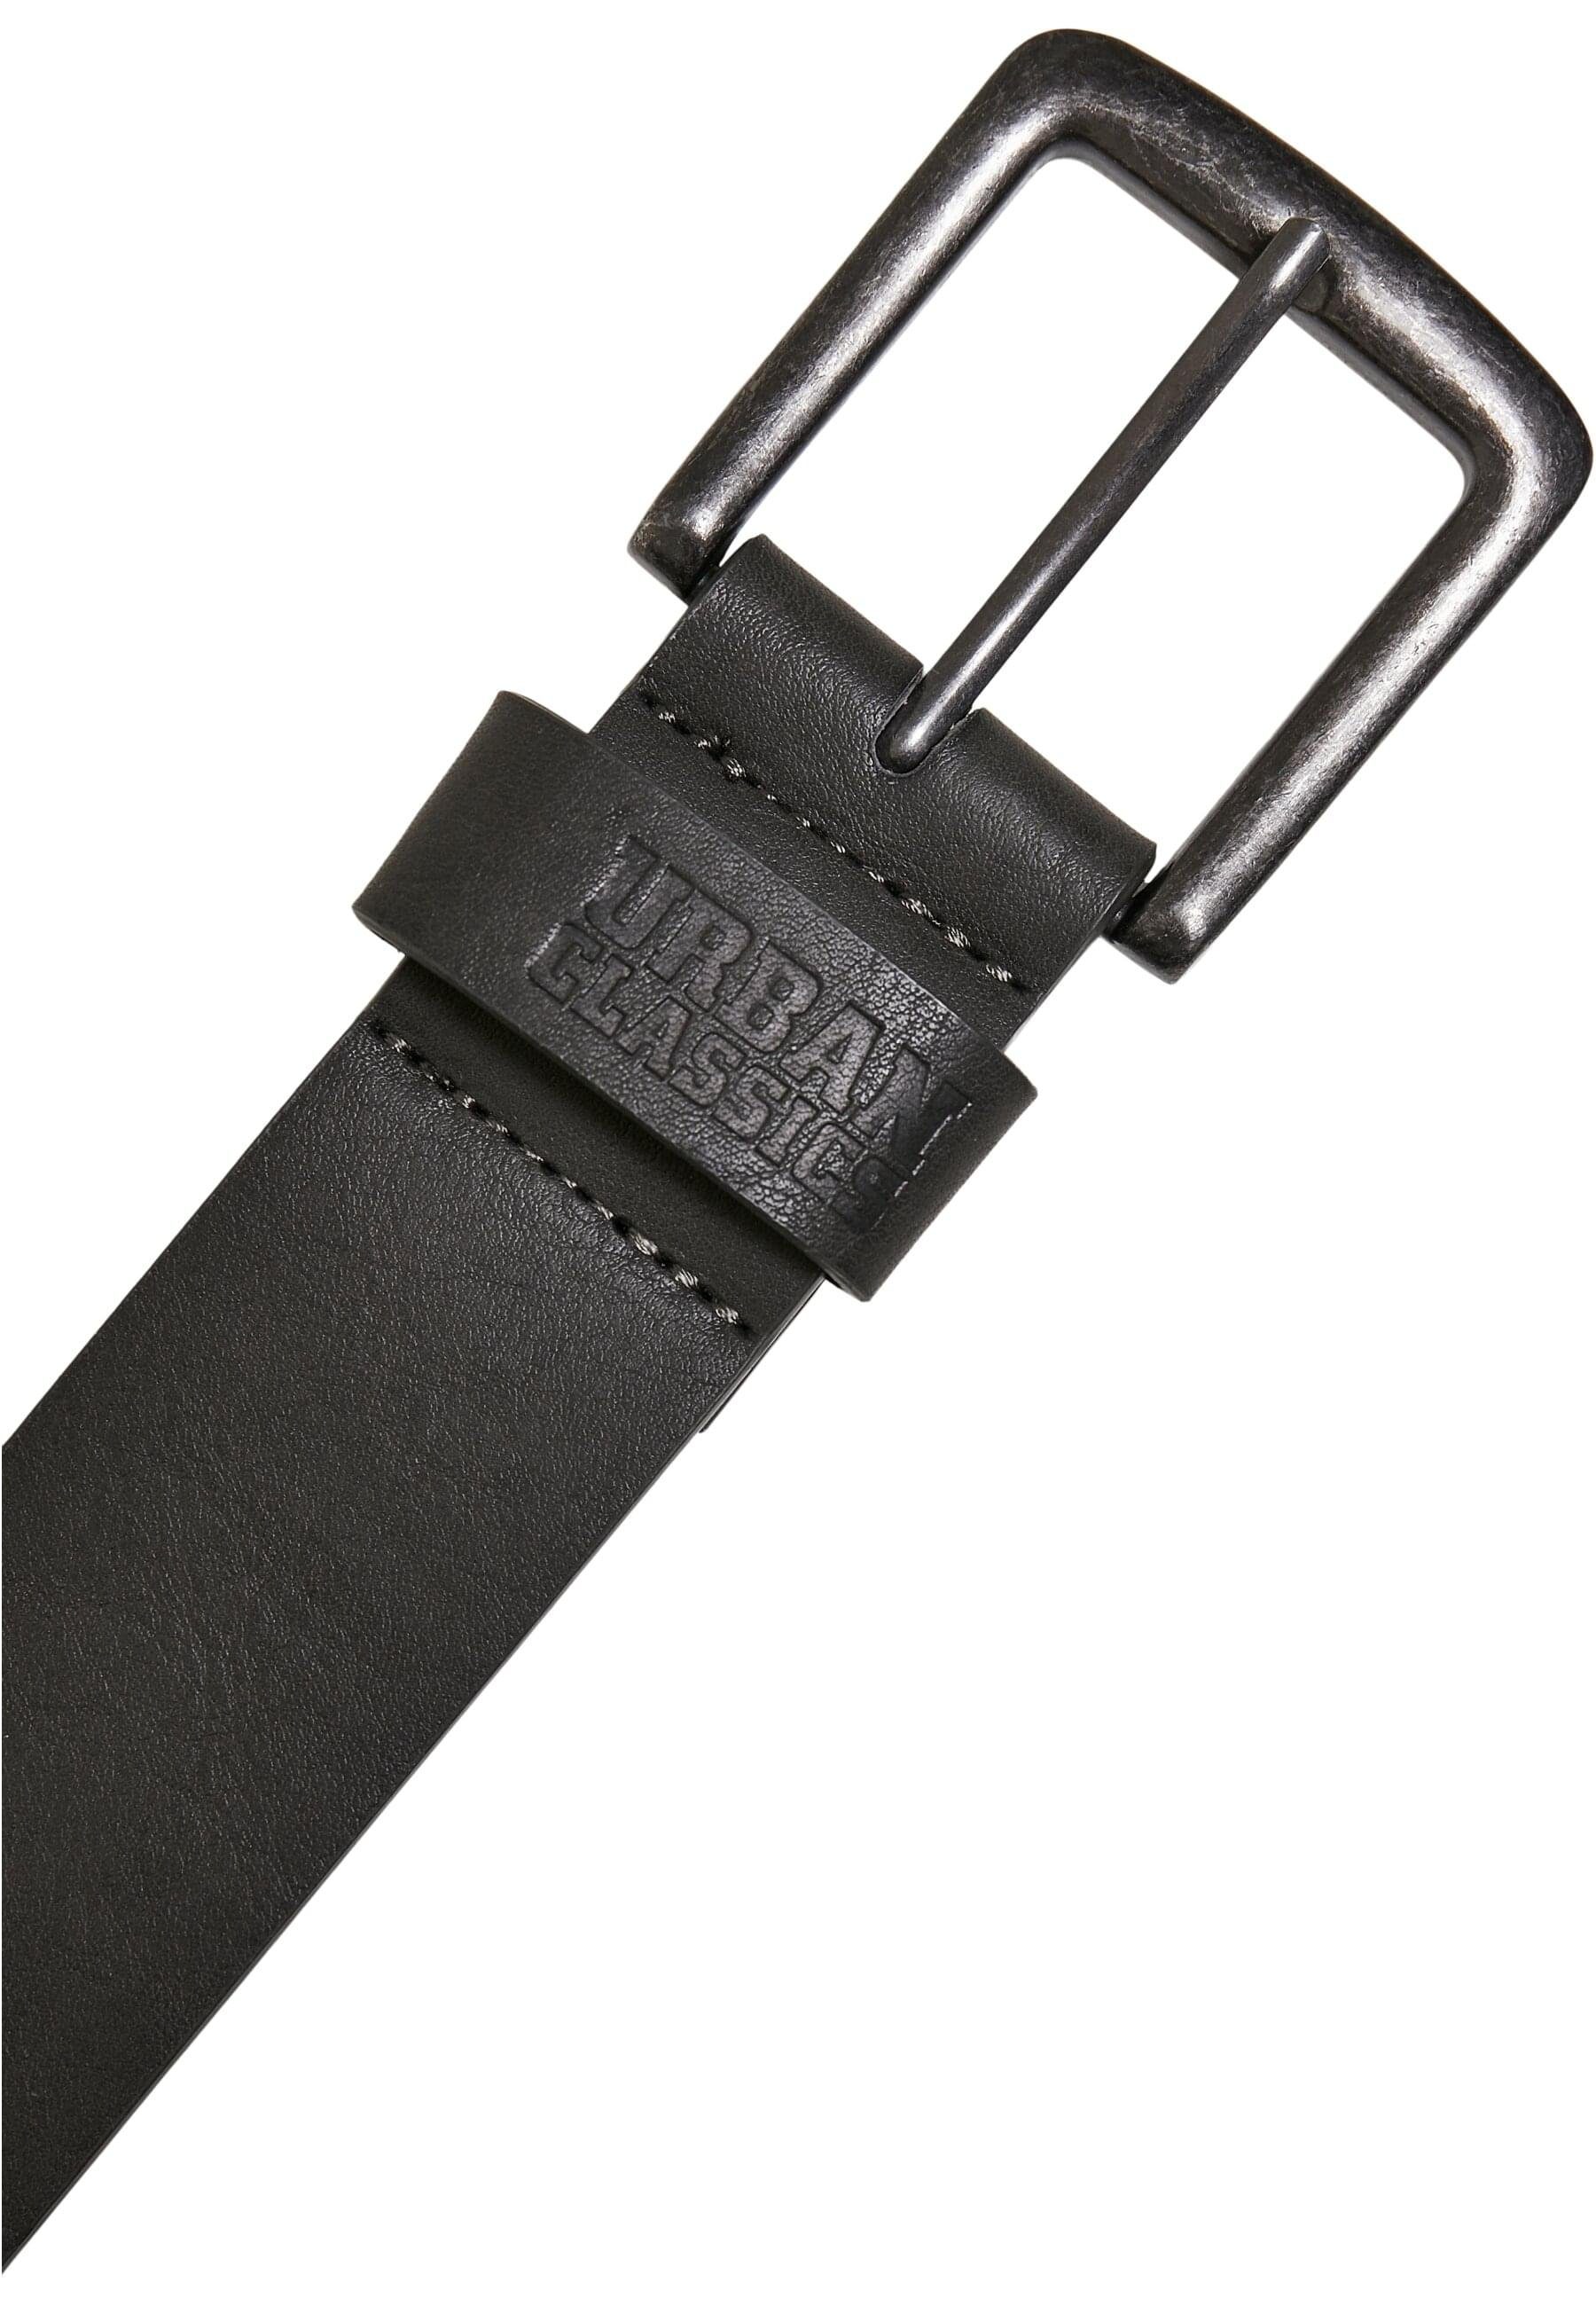 silver URBAN buckle Leather in Metal Imitation CLASSICS Hüftgürtel used Belt, Unisex